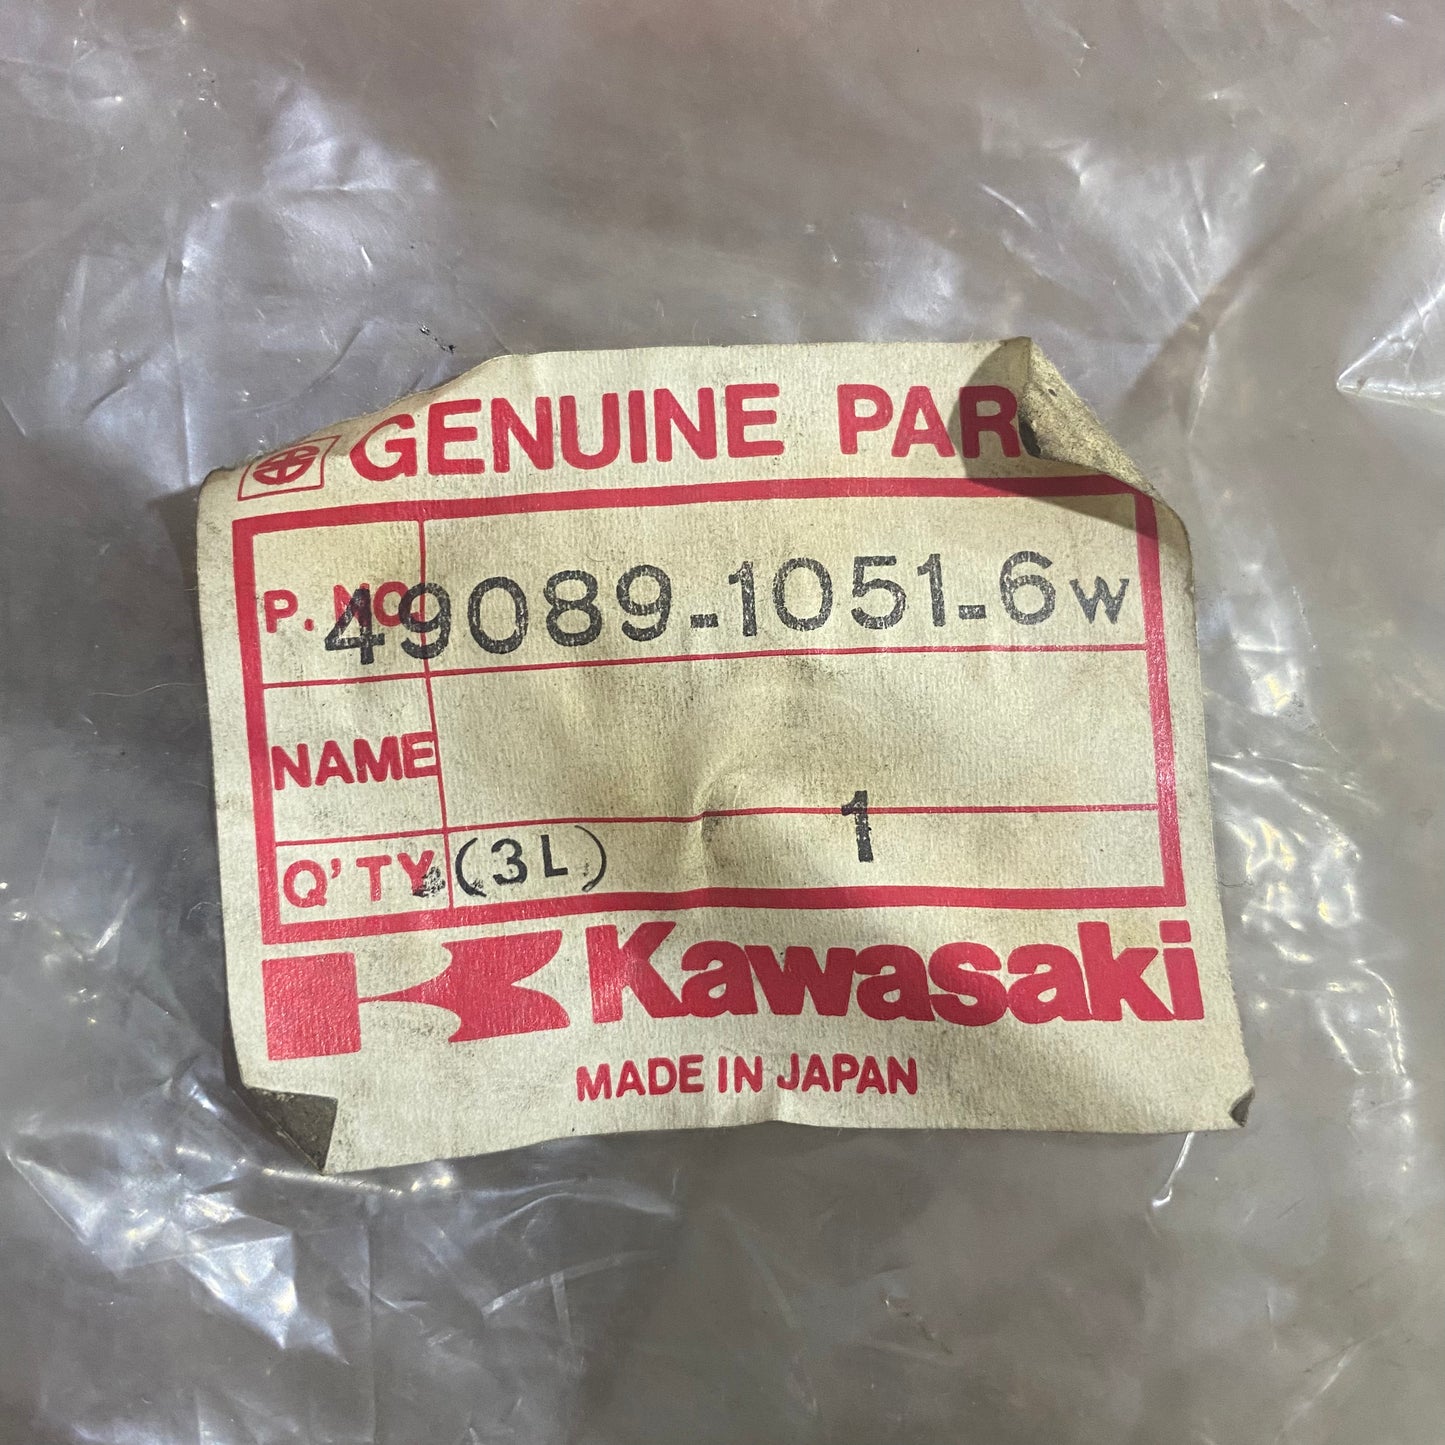 KAWASAKI - SHROUD-ENGINE, LH, L.GR 49089-1051-6W